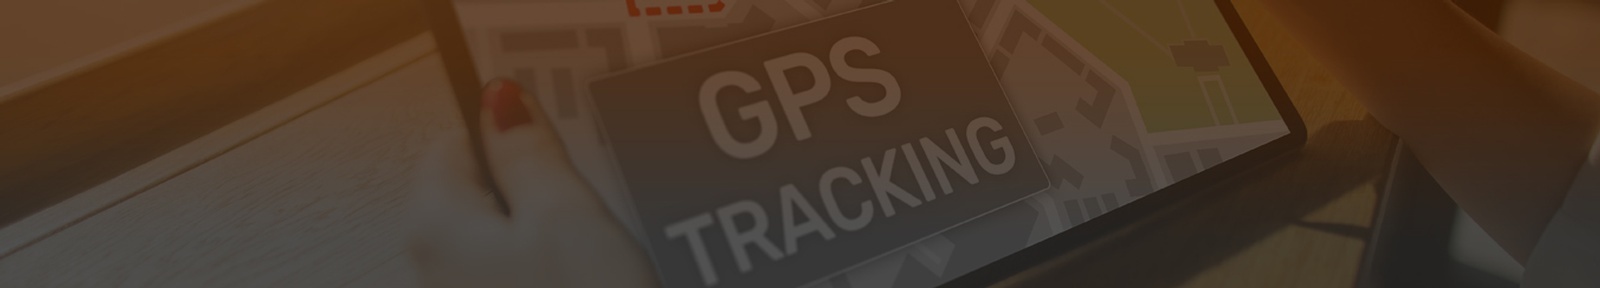 Car GPS Tracker Installation Services in Kelowna, BC